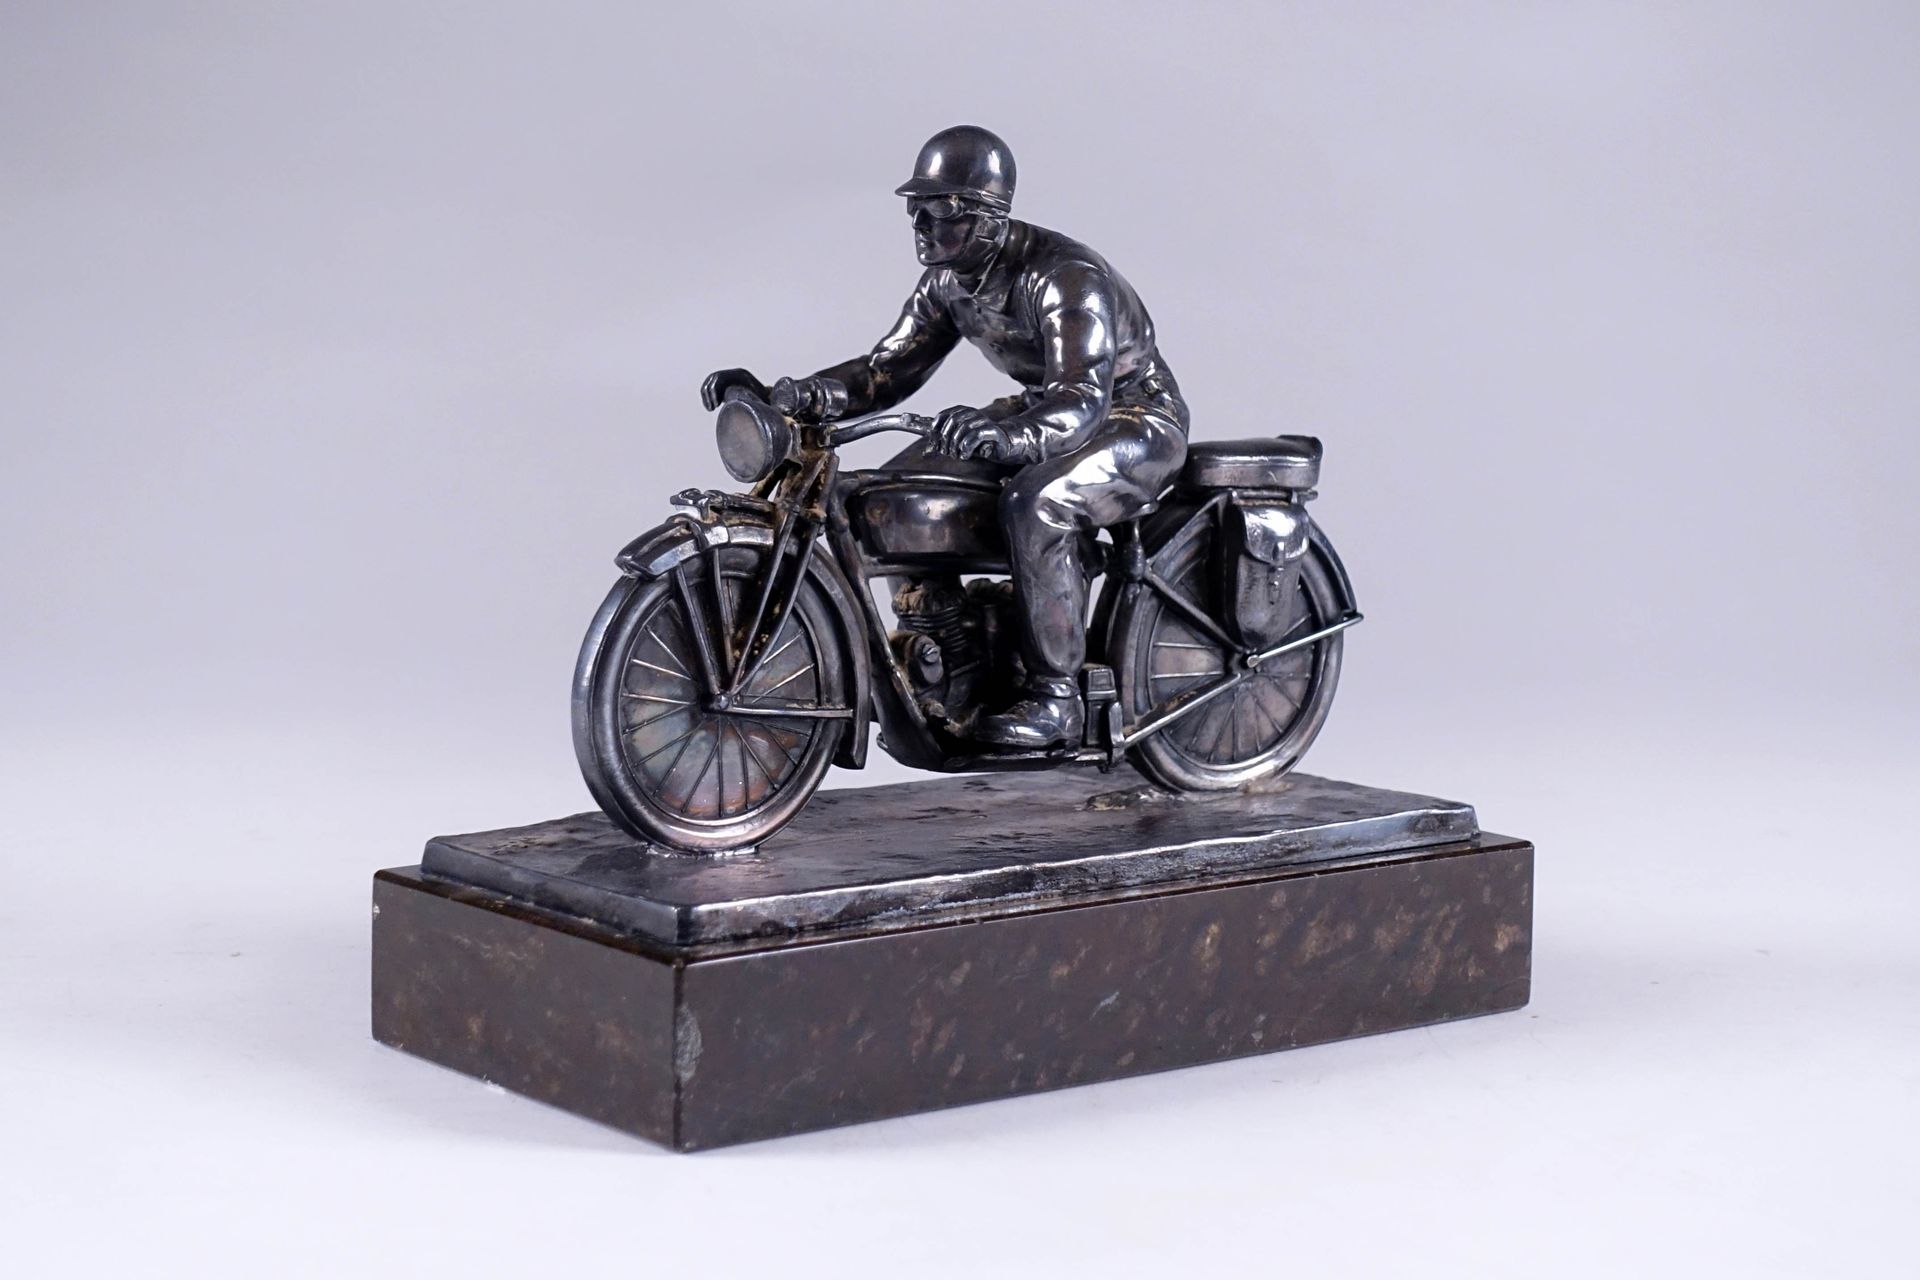 Le Motocycliste. 大理石平台上的镀银金属雕塑。未签署。约1920年。尺寸：21 x 10 x 18厘米。